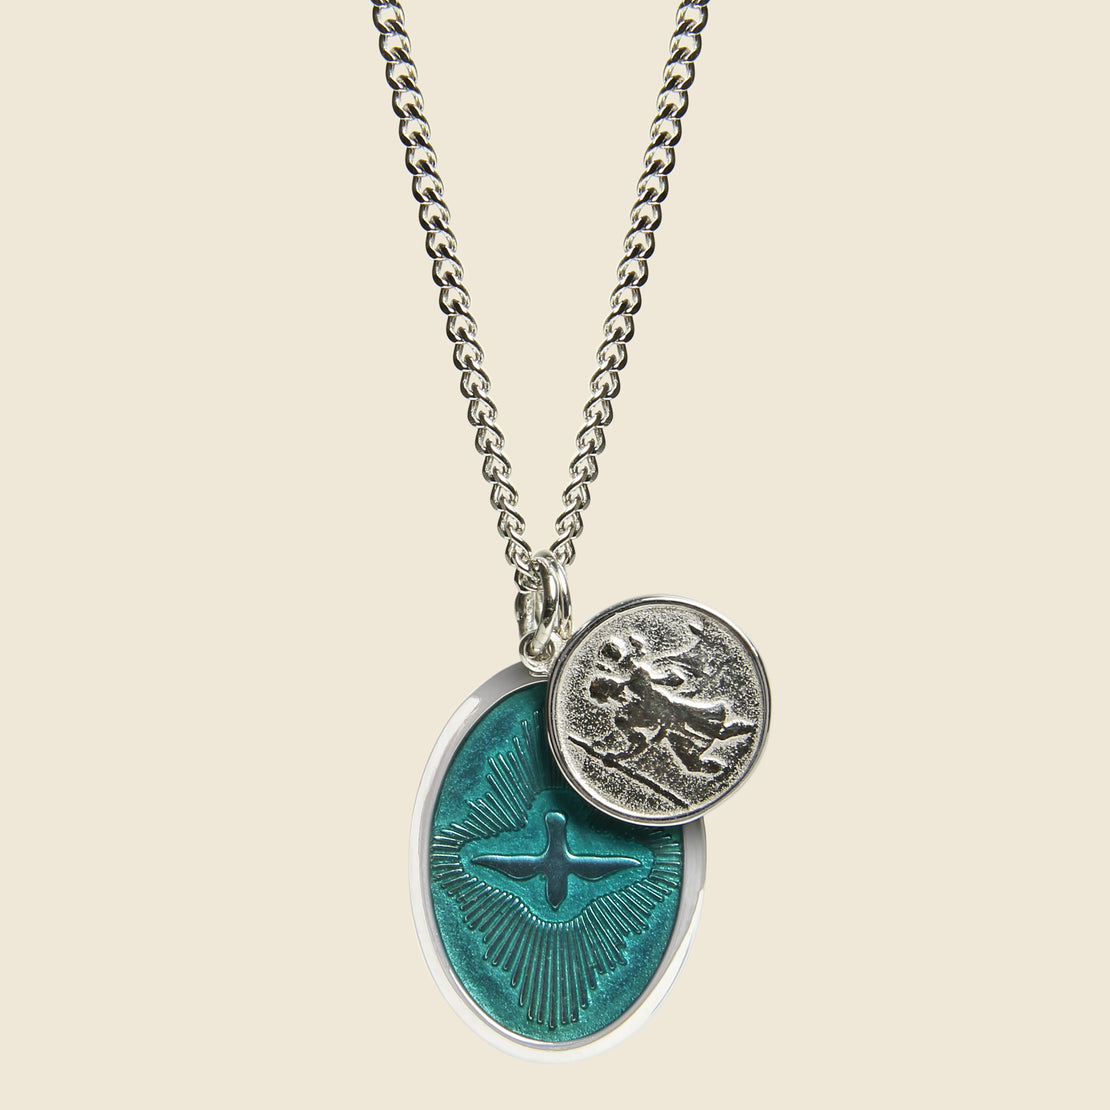 Miansai Mini Dove Pendant Necklace - Teal Enamel/Sterling Silver